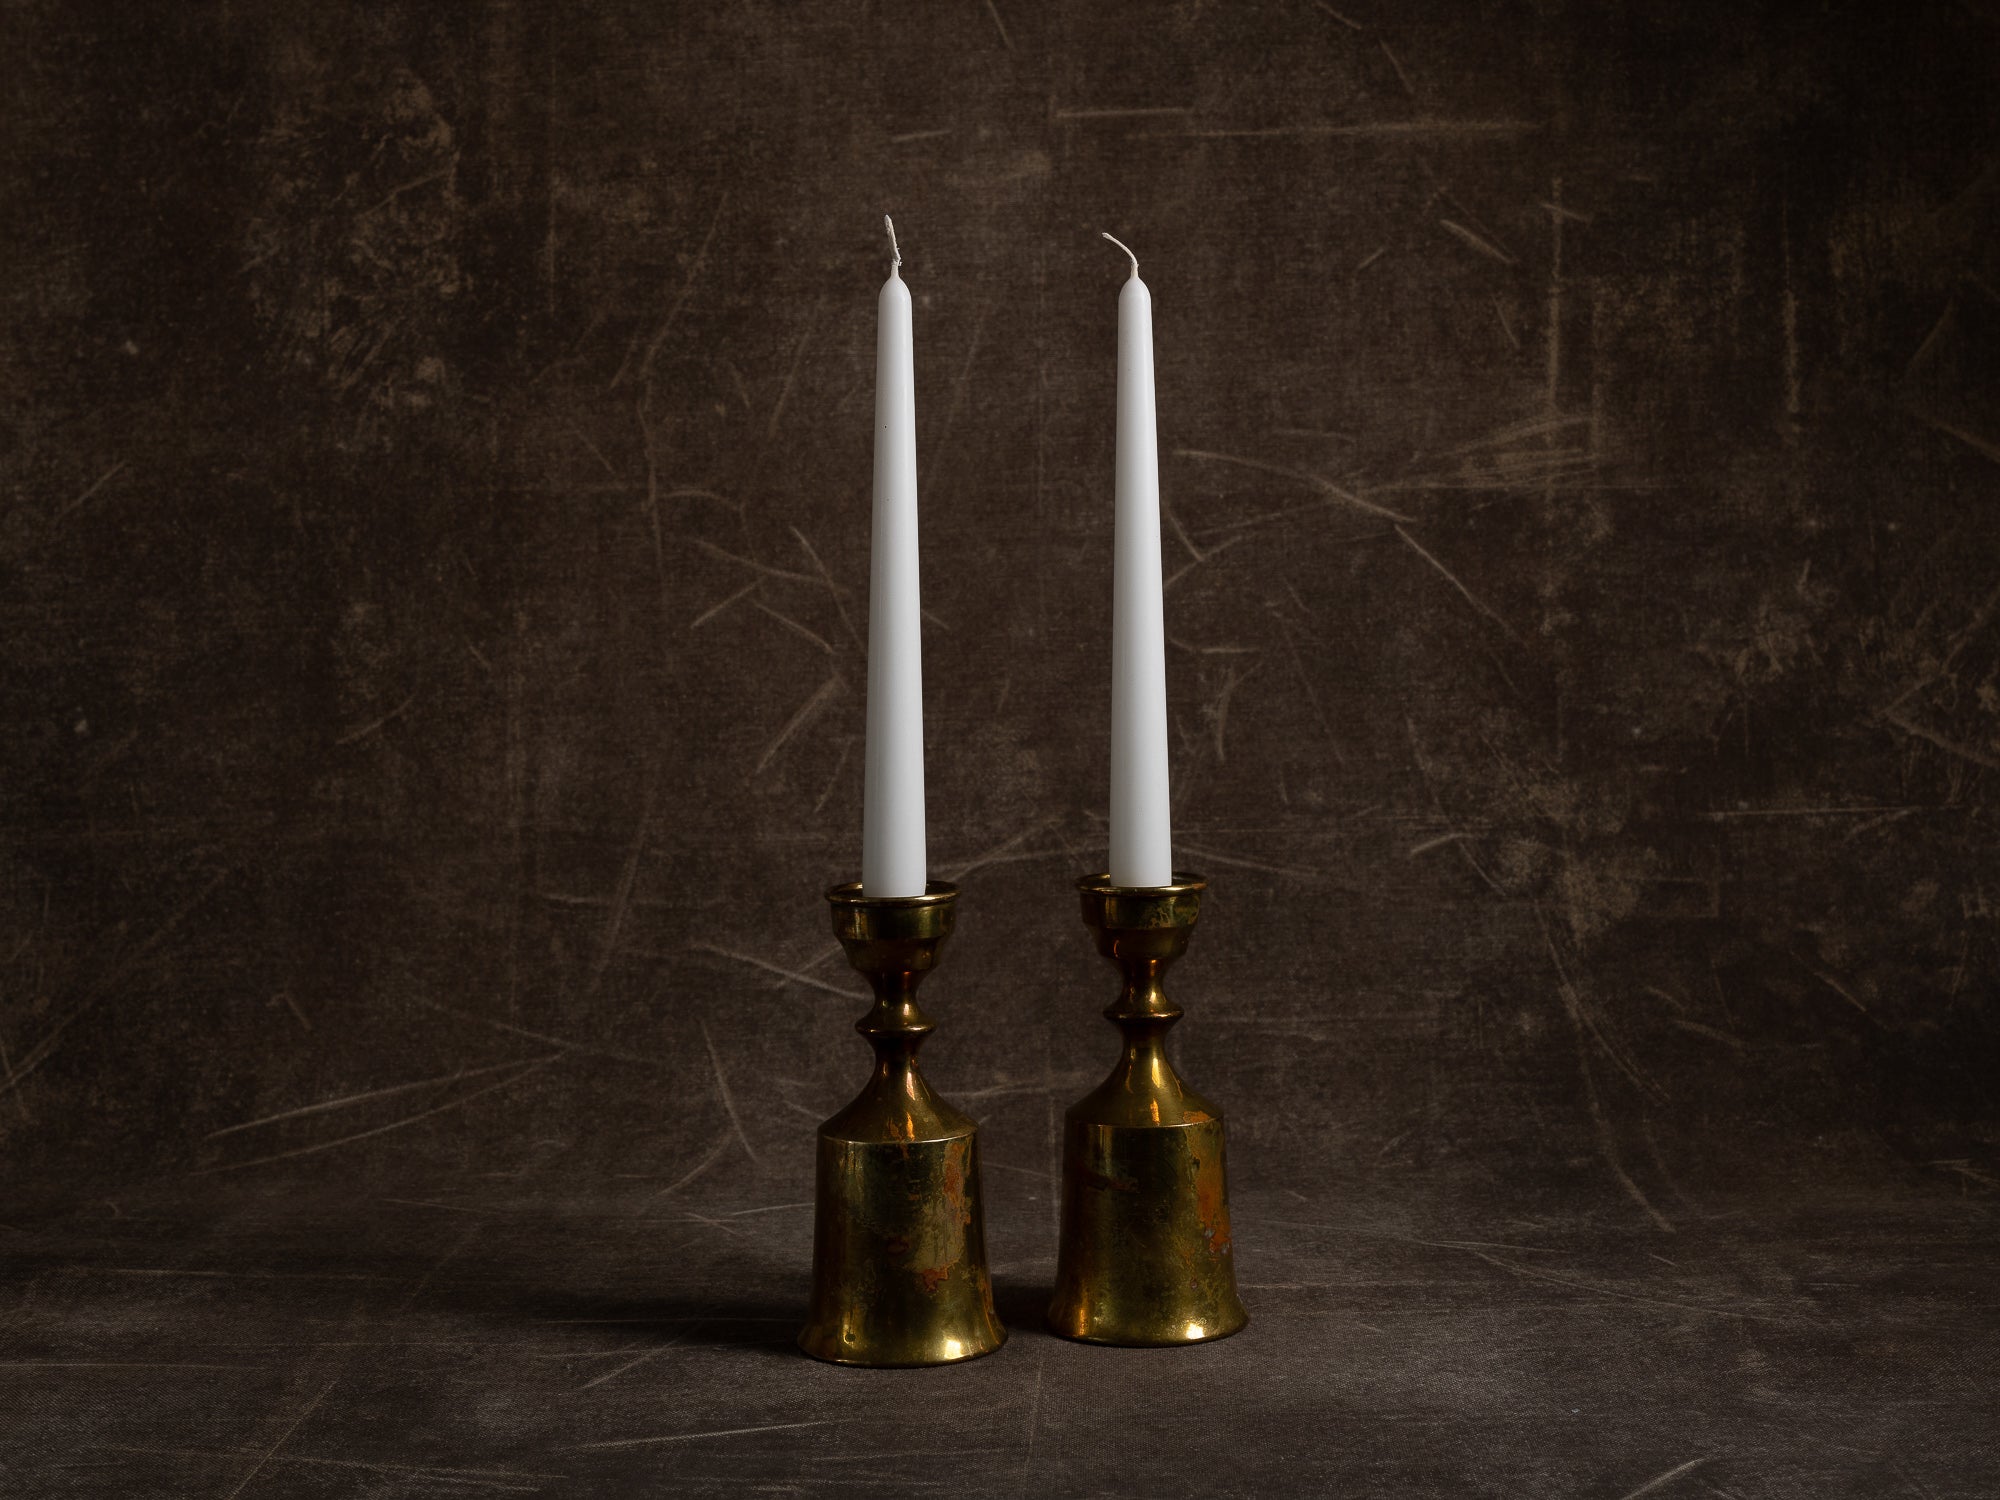 Paire de flambeaux modernistes par Boyes Metalkunst, Danemark (vers 1950)..Set of 2 modernist Candle holders by Boyes Metalkunst, Denmark (circa 1950)